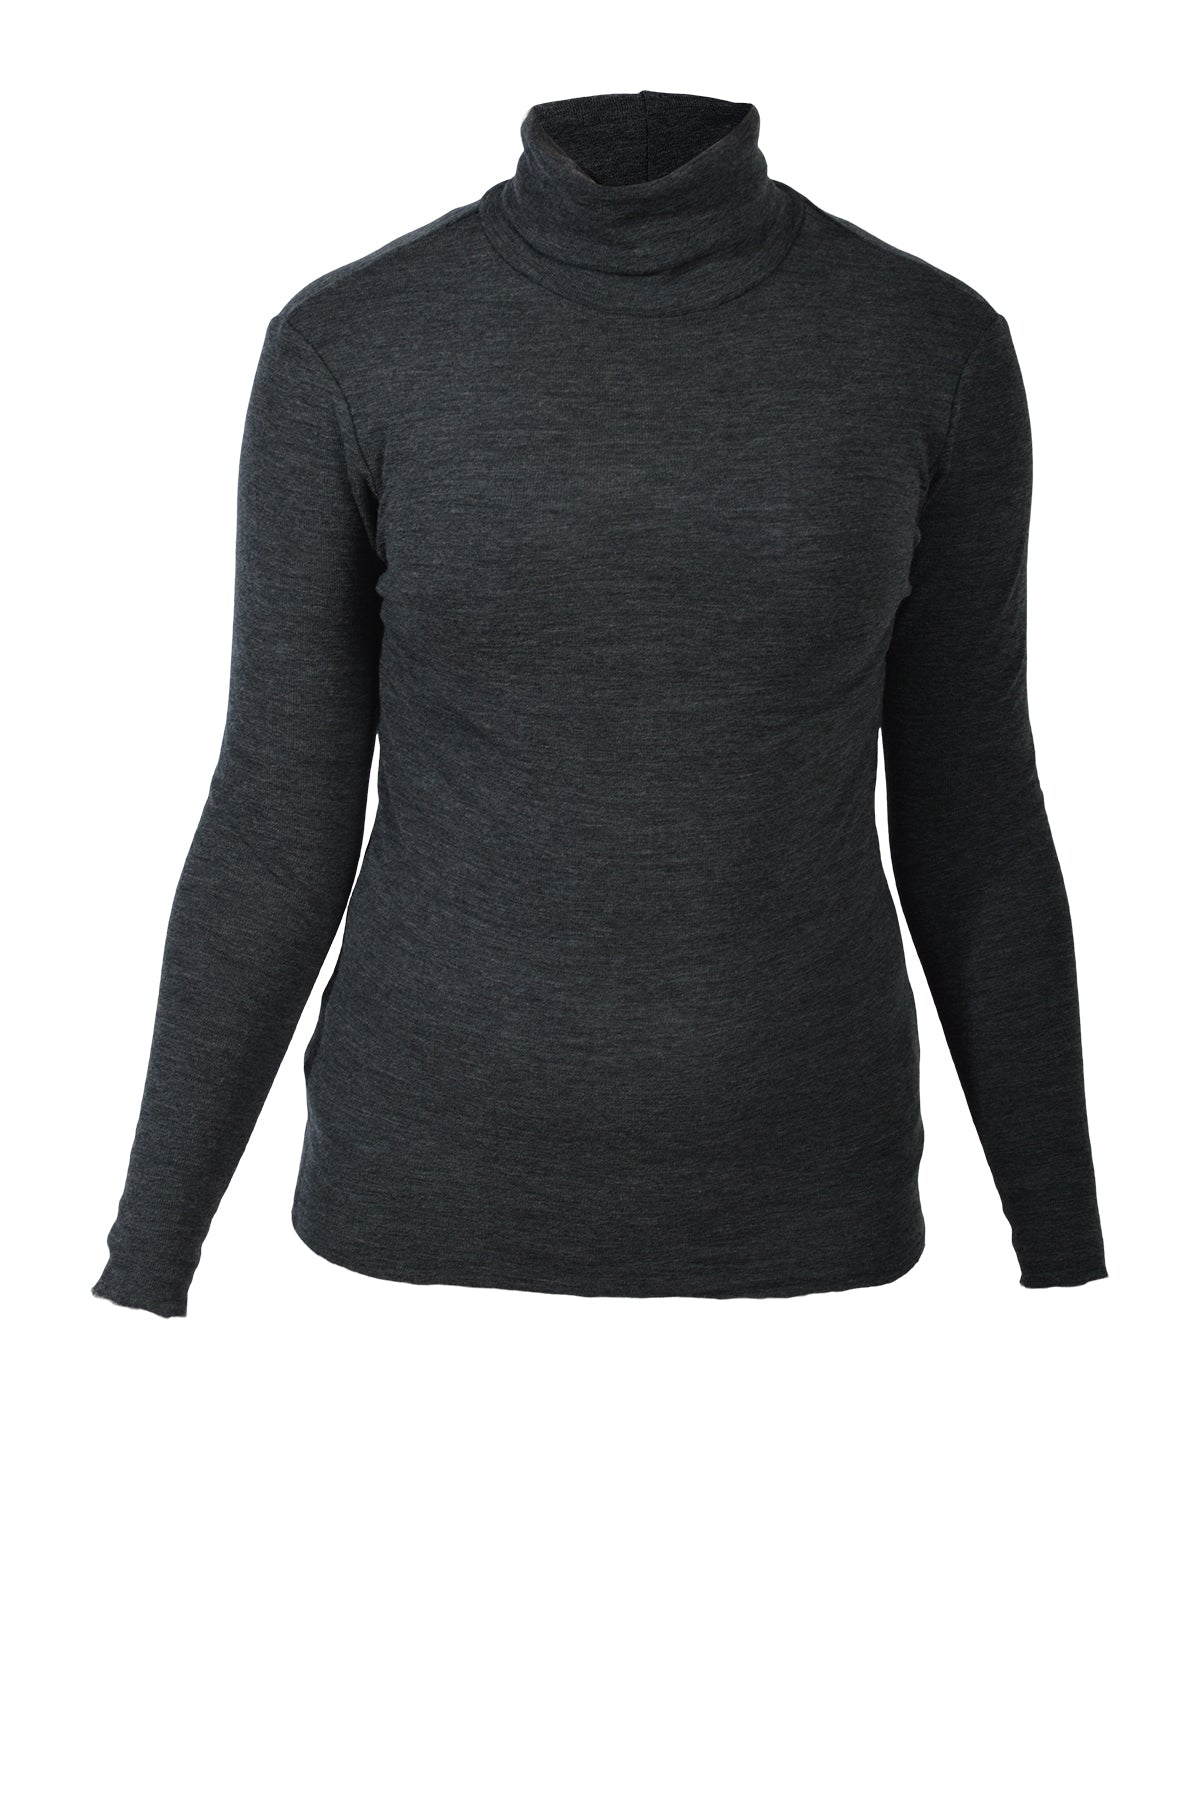 Blusbar by basic Shirt roll neck L/S, Anthrasite